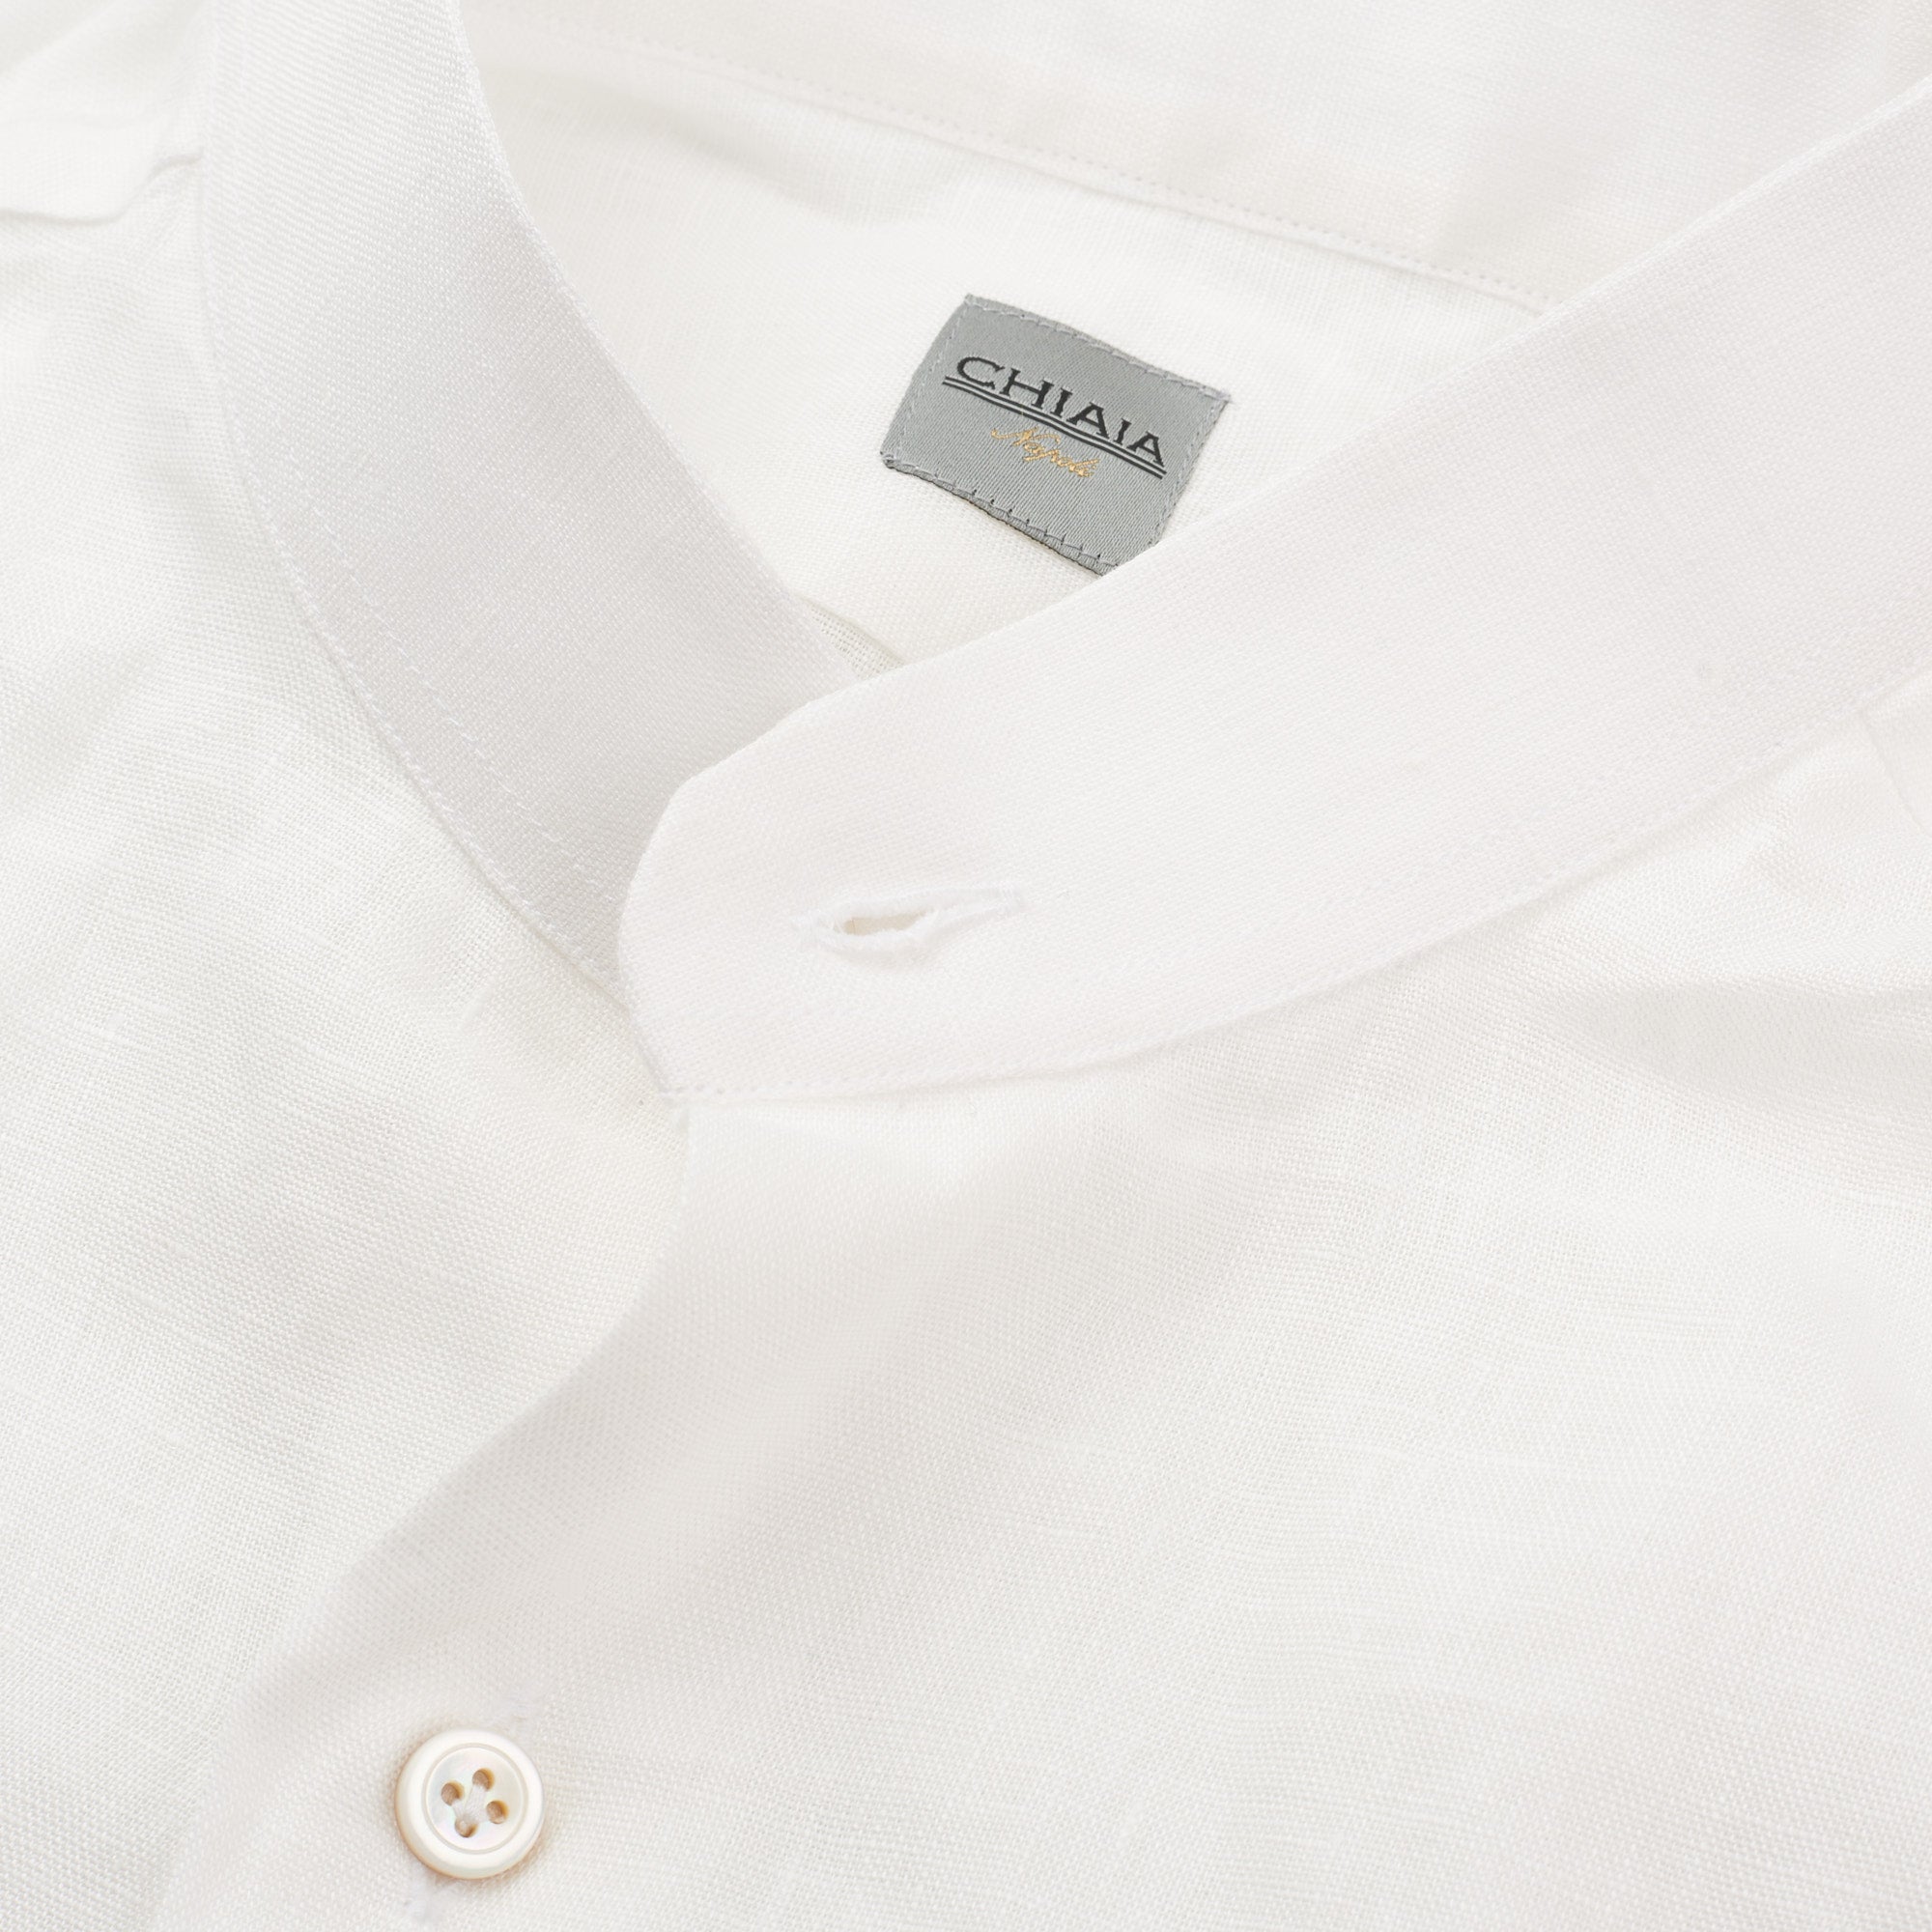 Sartoria CHIAIA Bespoke Handmade White Linen Band Collar Shirt EU 39 NEW US 15.5 SARTORIA CHIAIA